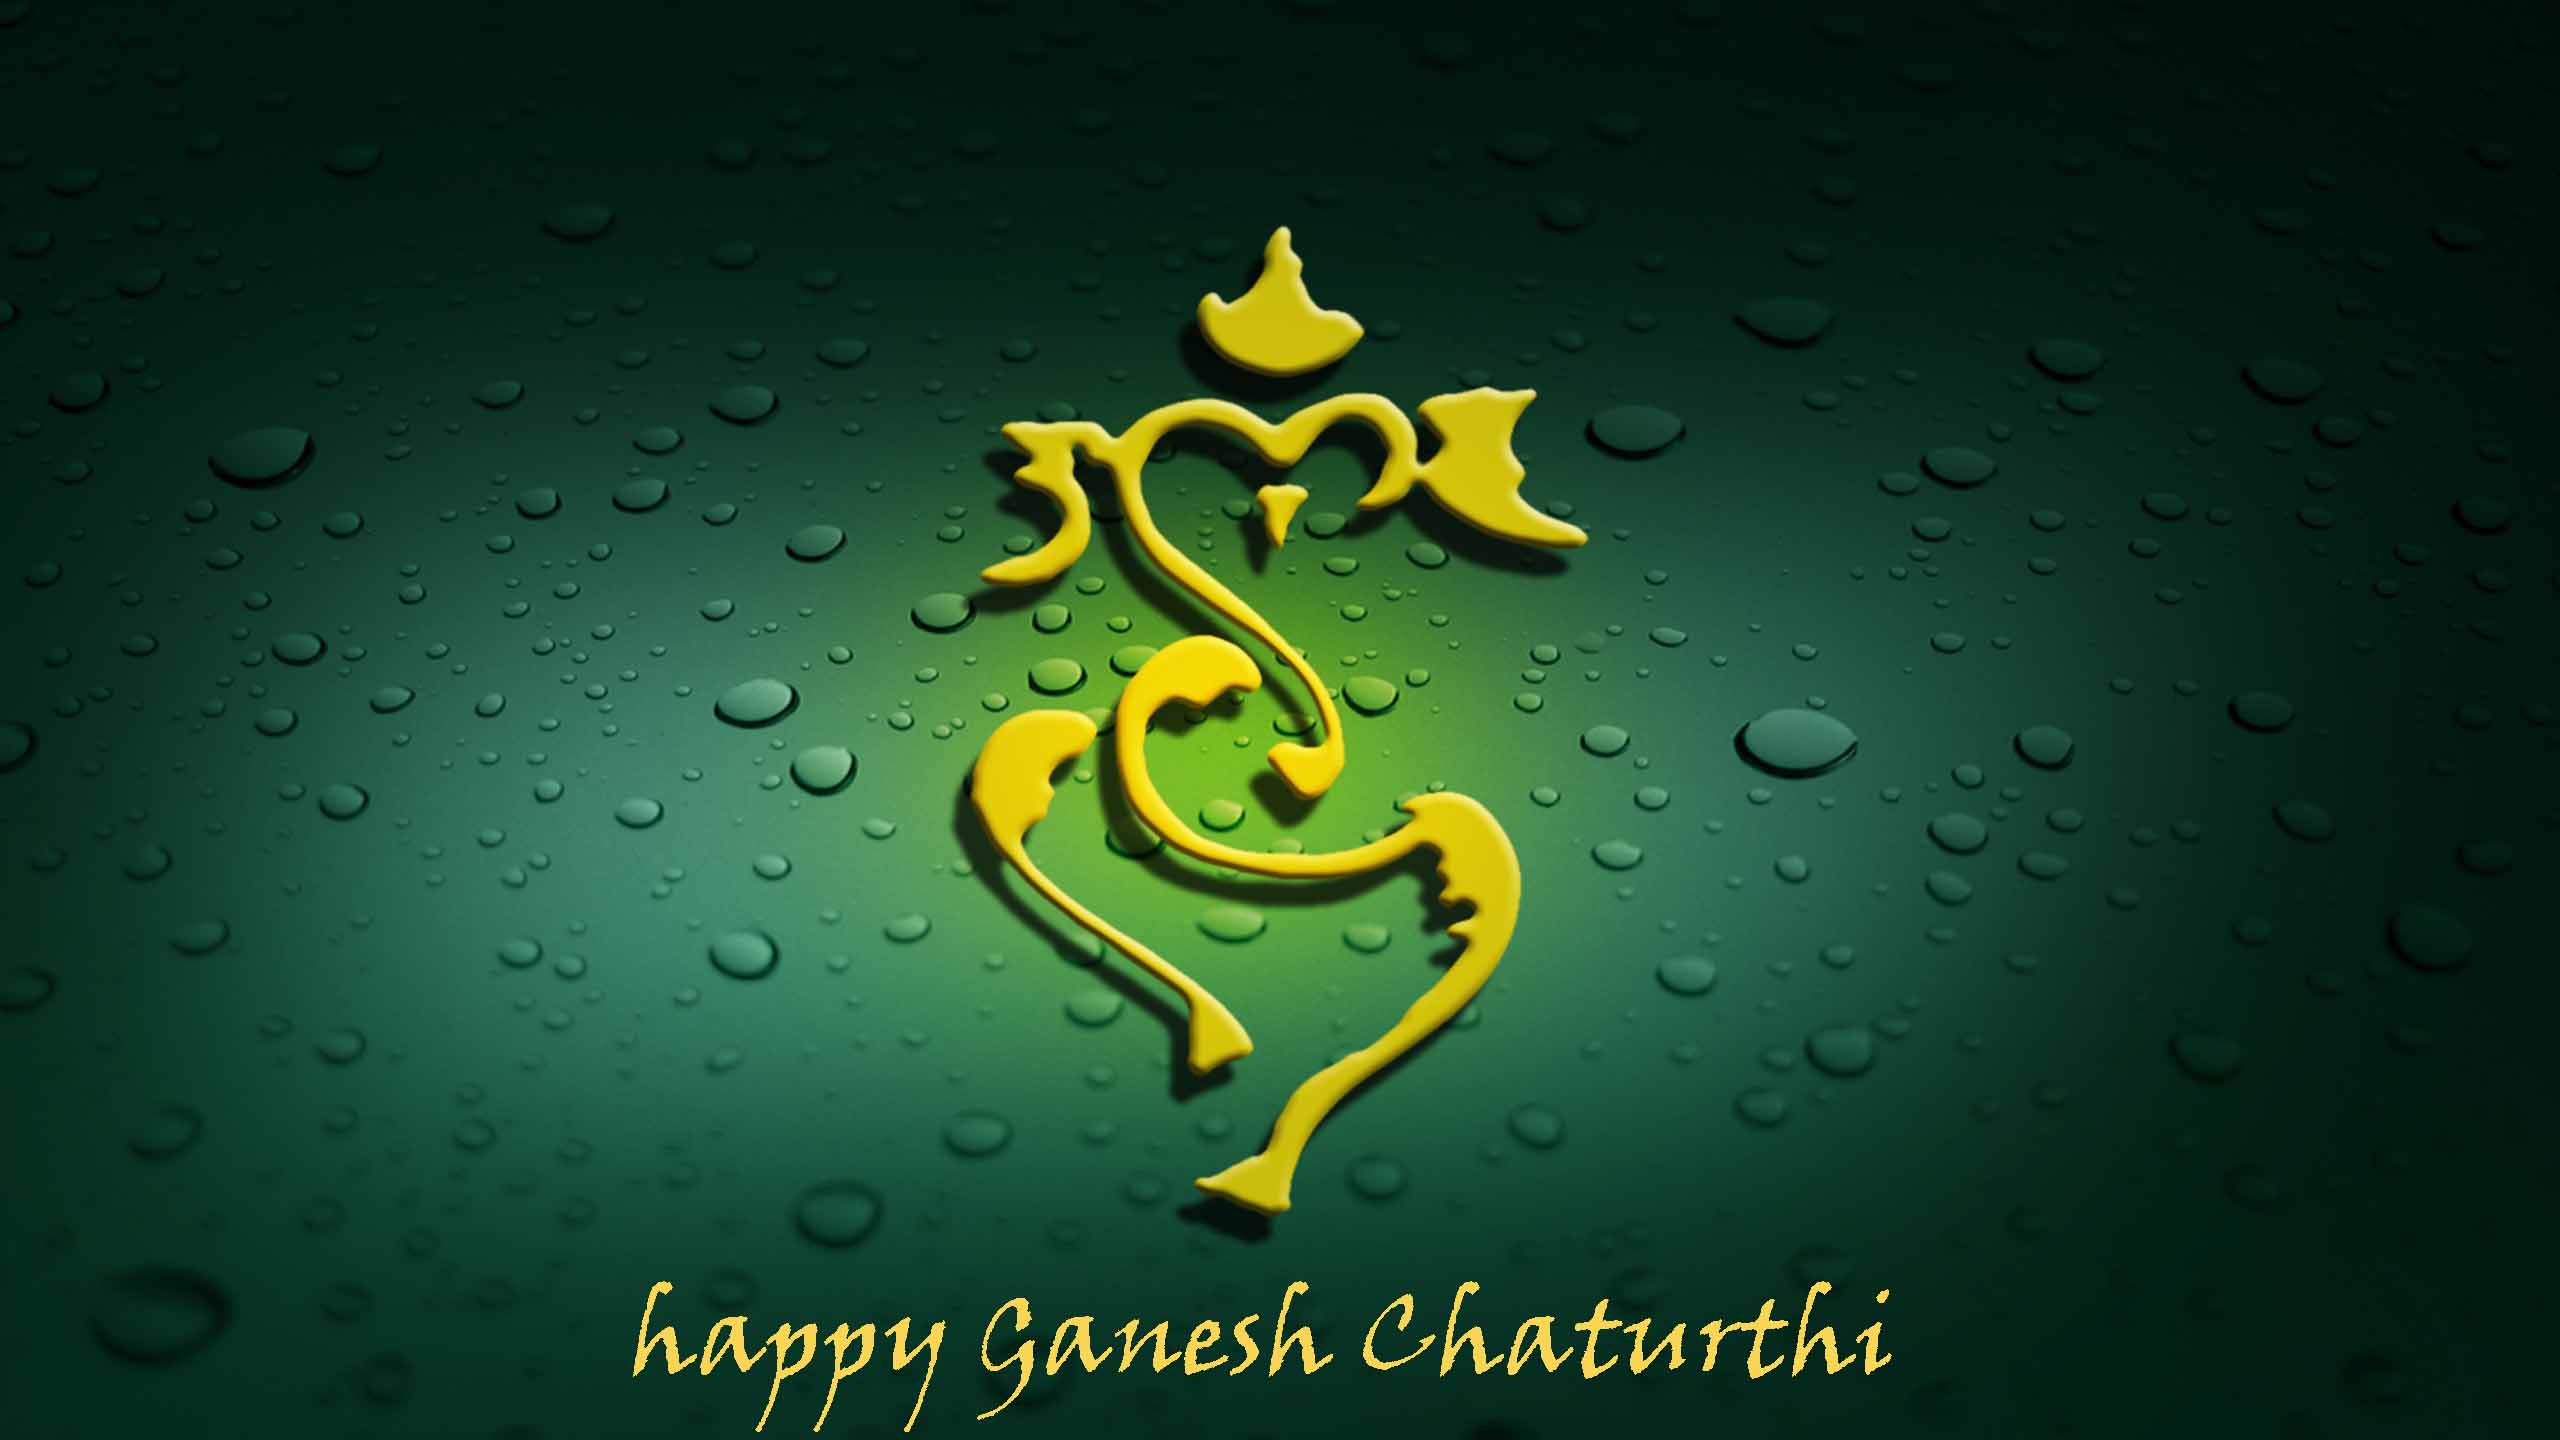 Happy Ganesh Chaturthi 2019 Hd Images